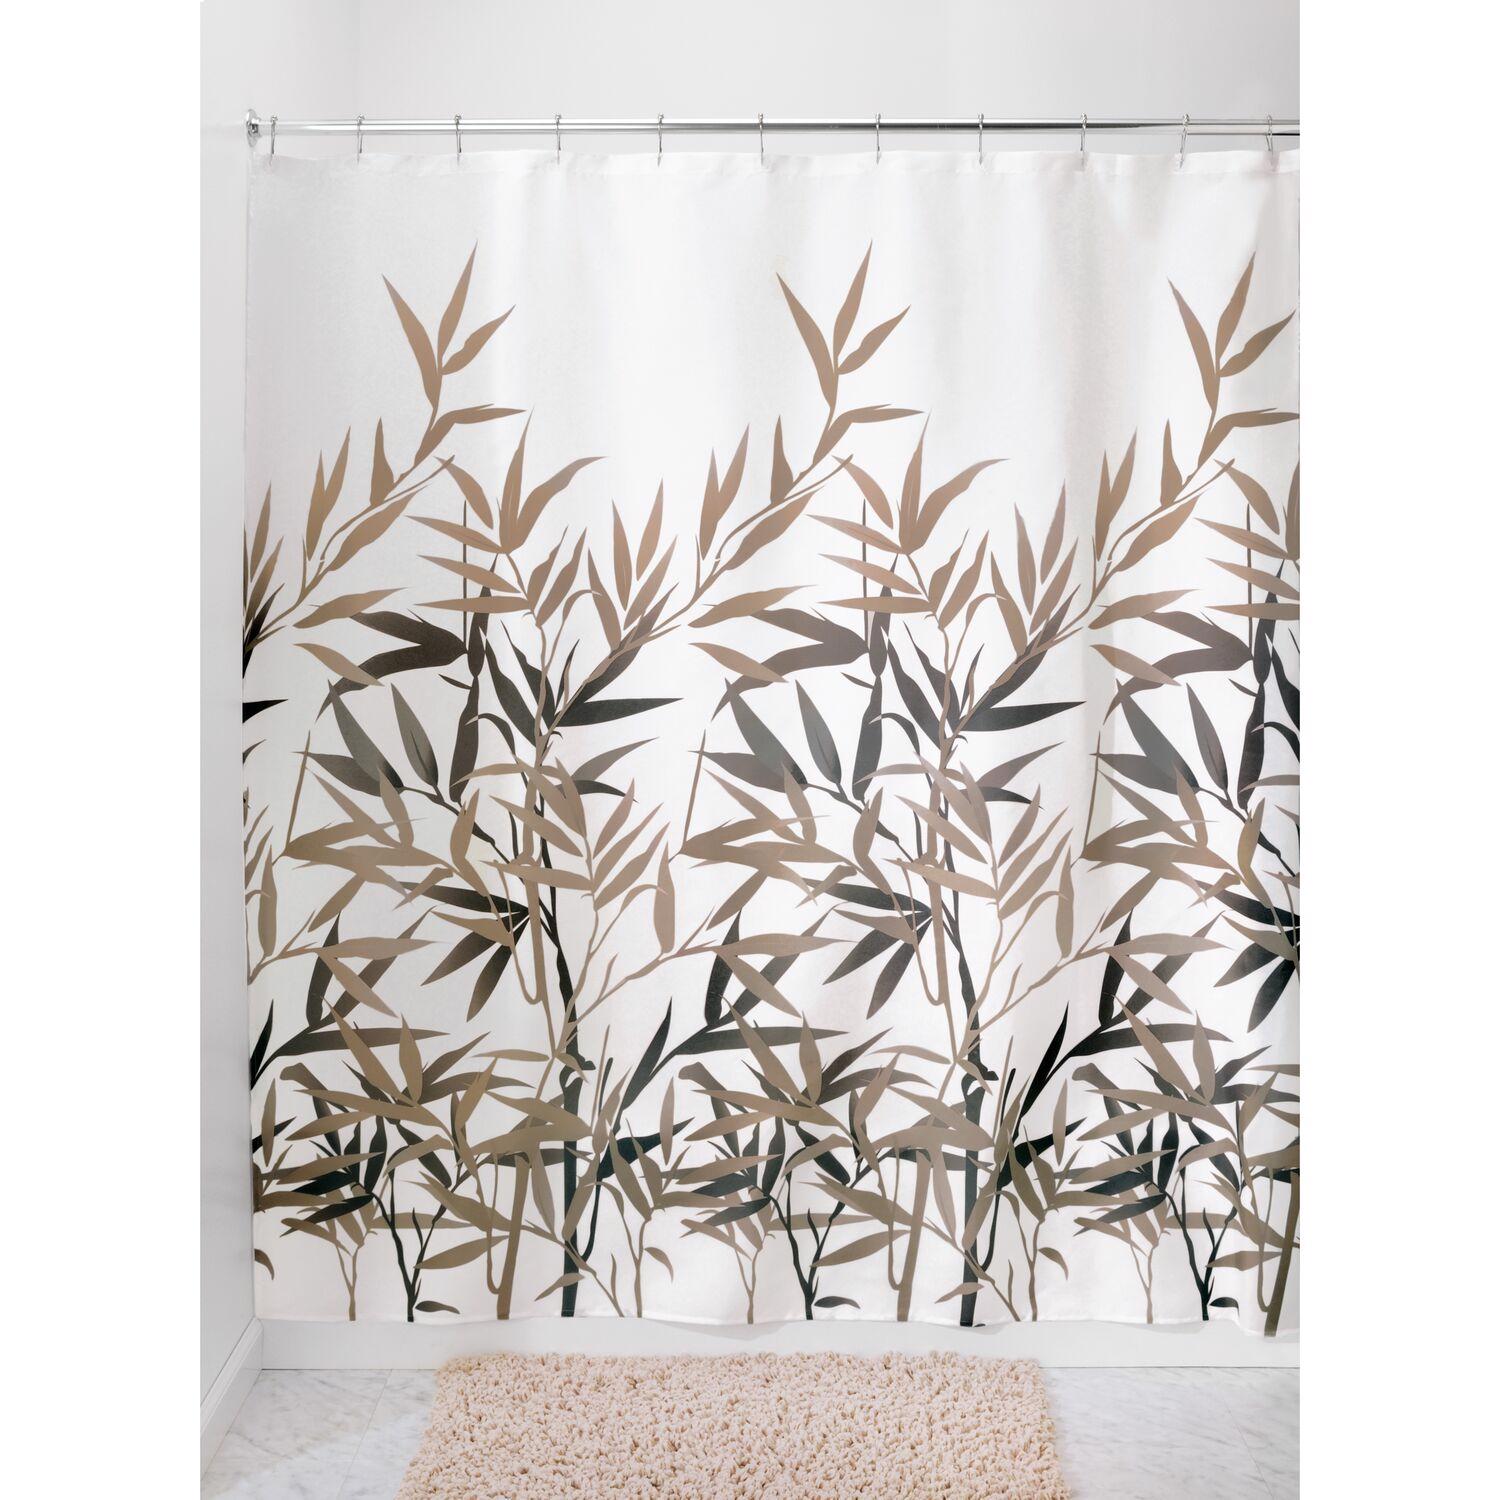 Photos - Shower Curtain Interdesign Anzu 72 in. H X 72 in. W Black/Tan Natural Bamboo Shower Curta 